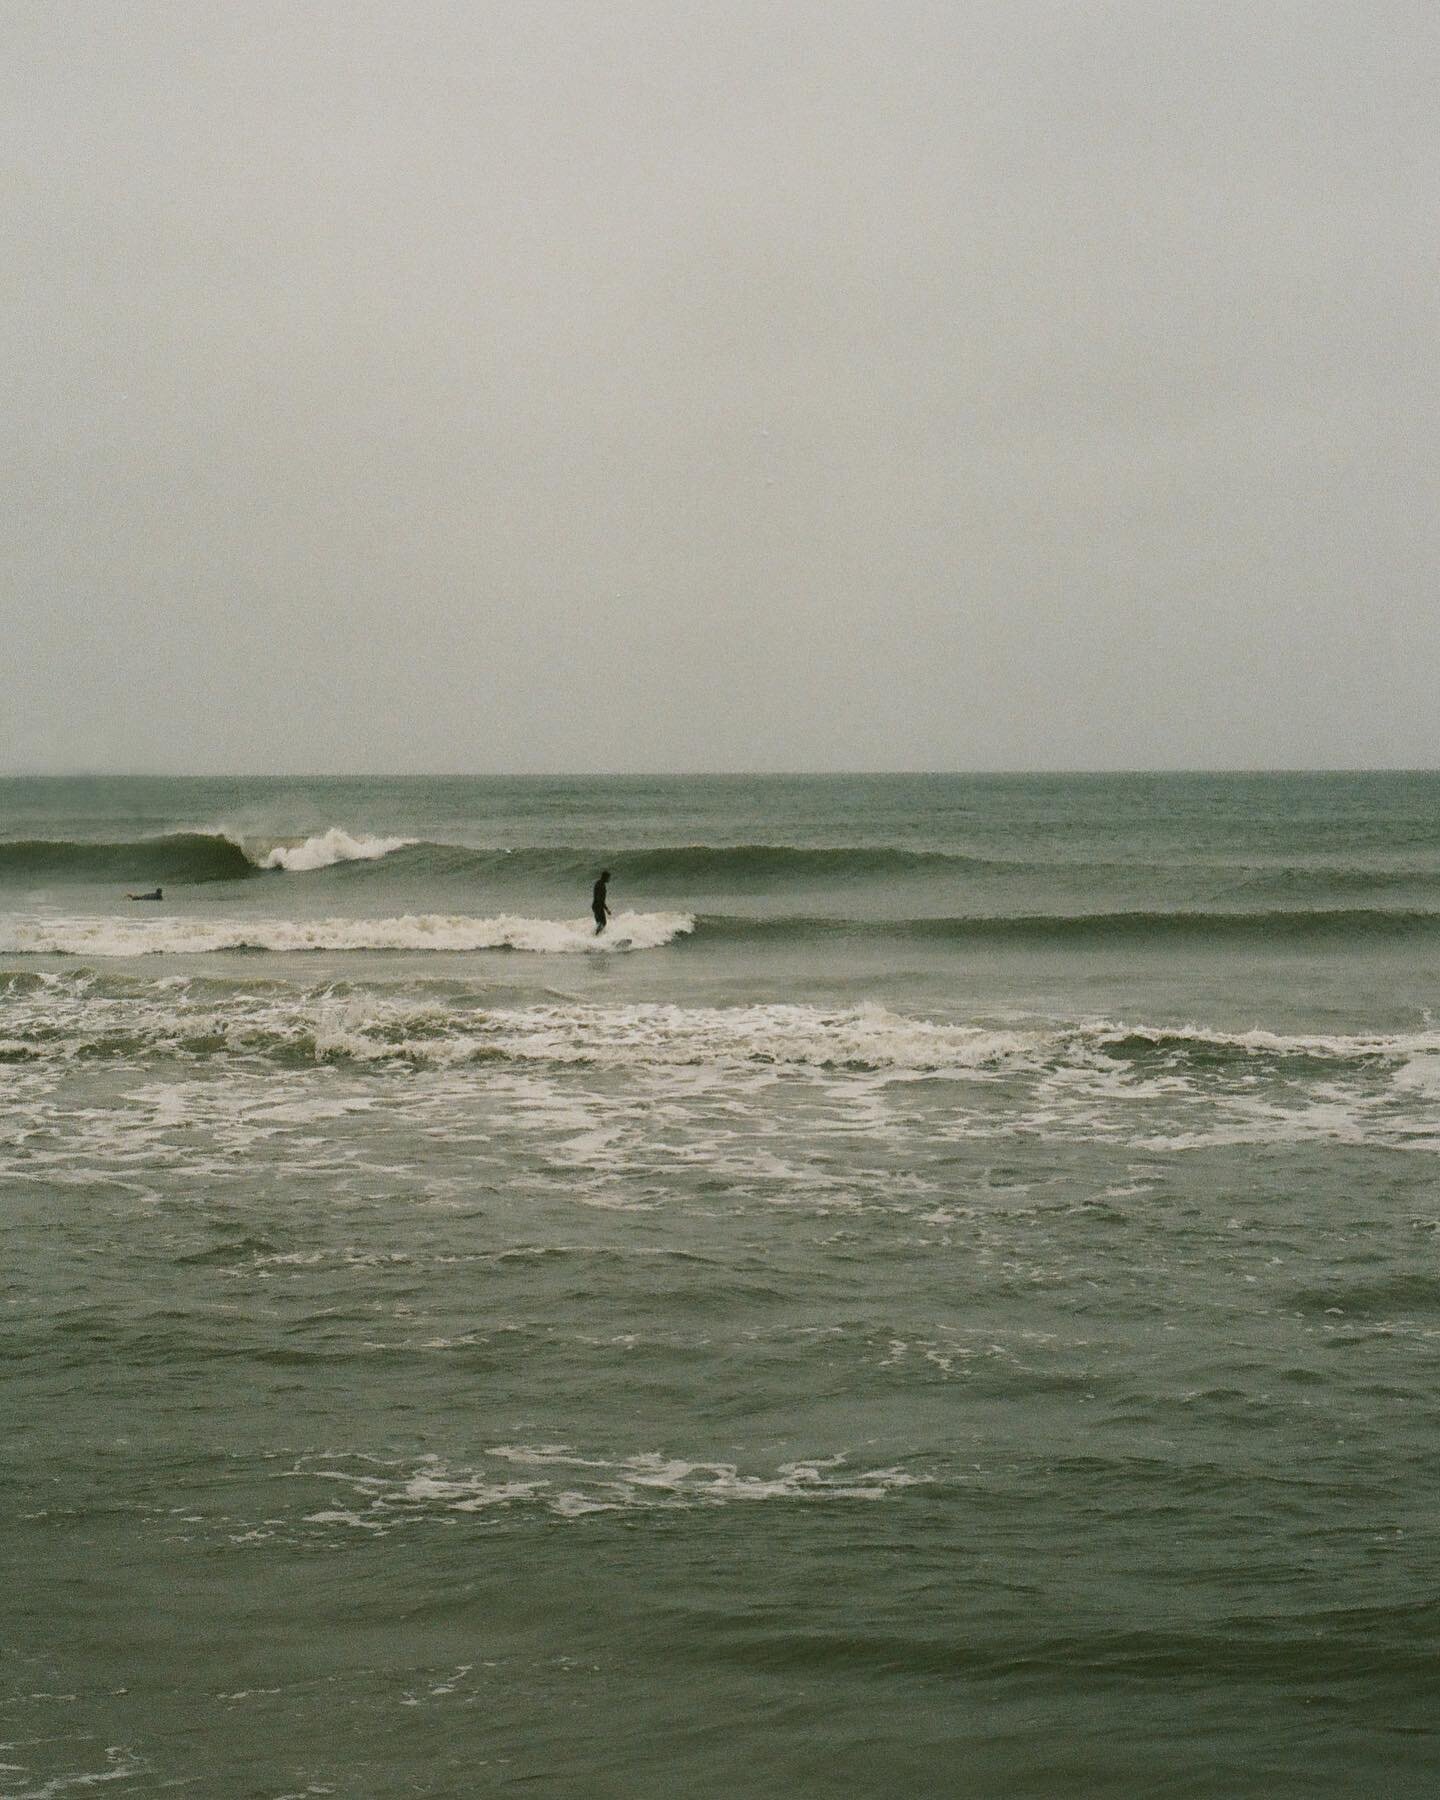 zephyr 

🏄🏼🤙 

#nantucket
#filmisnotdead #filmphotography 
#35mmphoto #surfphoto